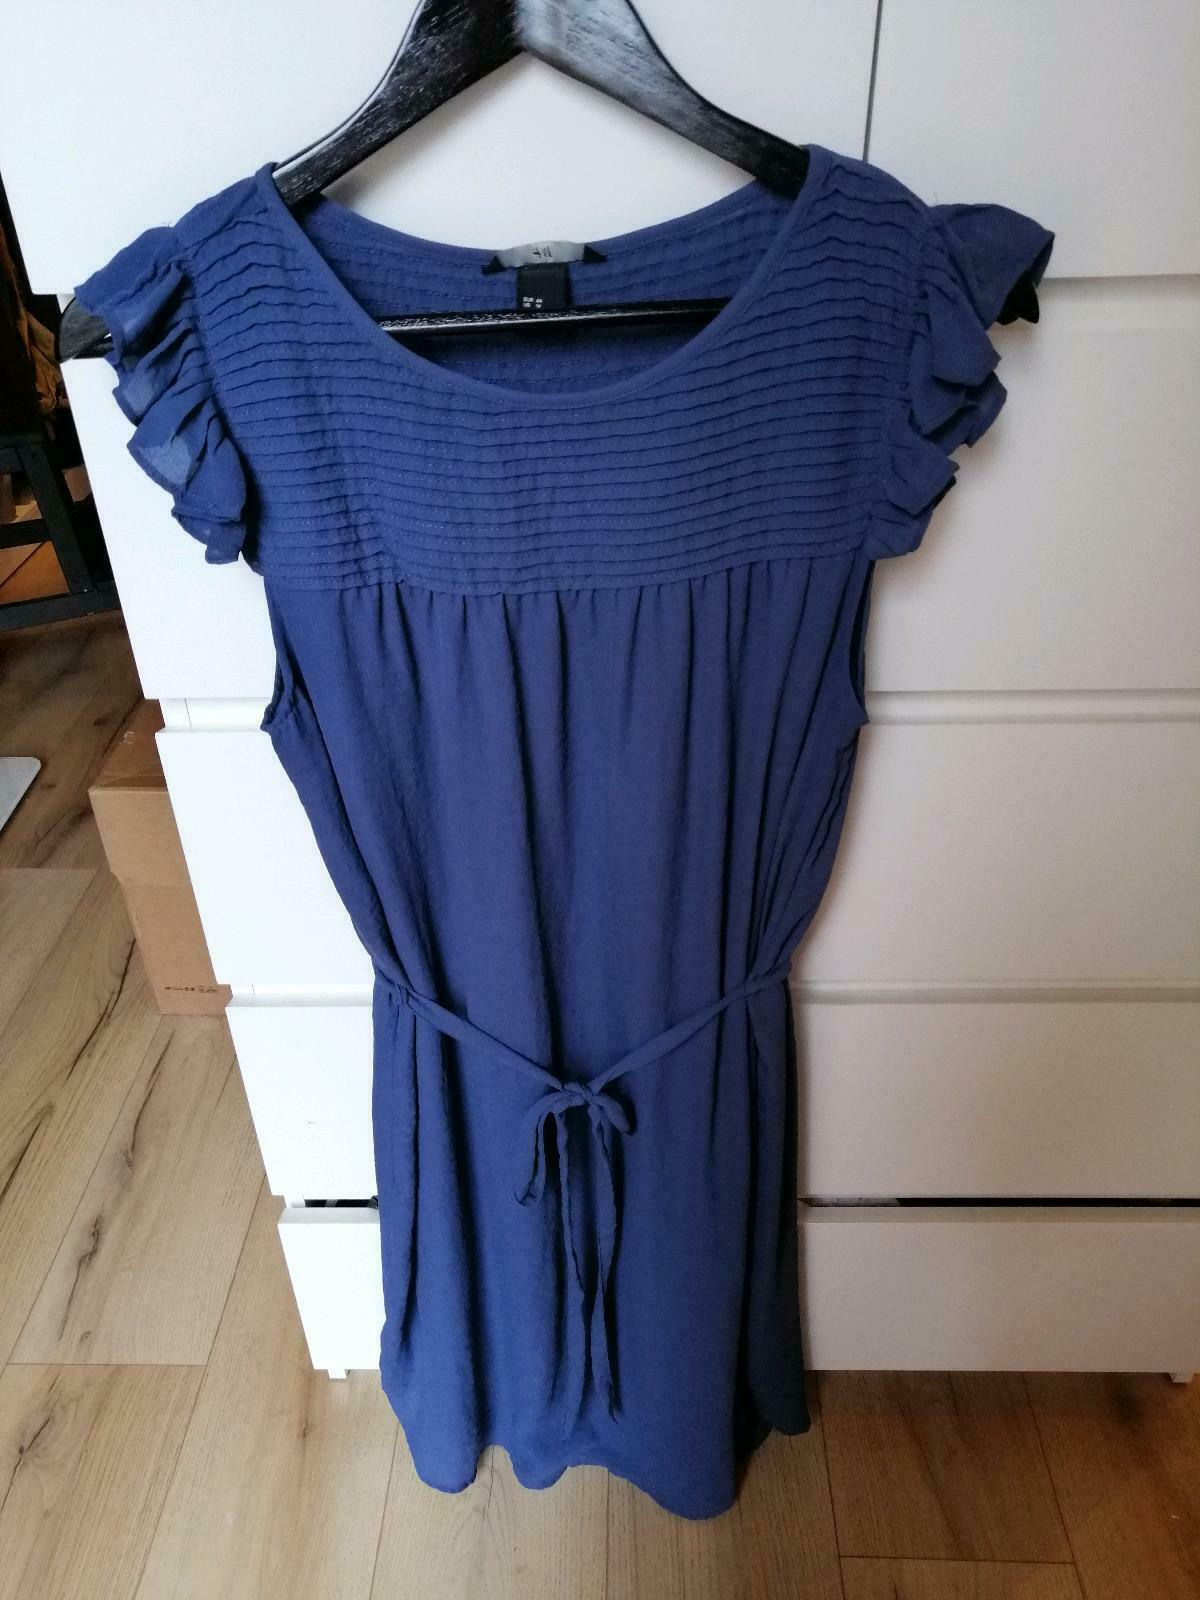 Hm Süßes Chiffon Kleid Tunika Taubenblau Rüschen Gr 44